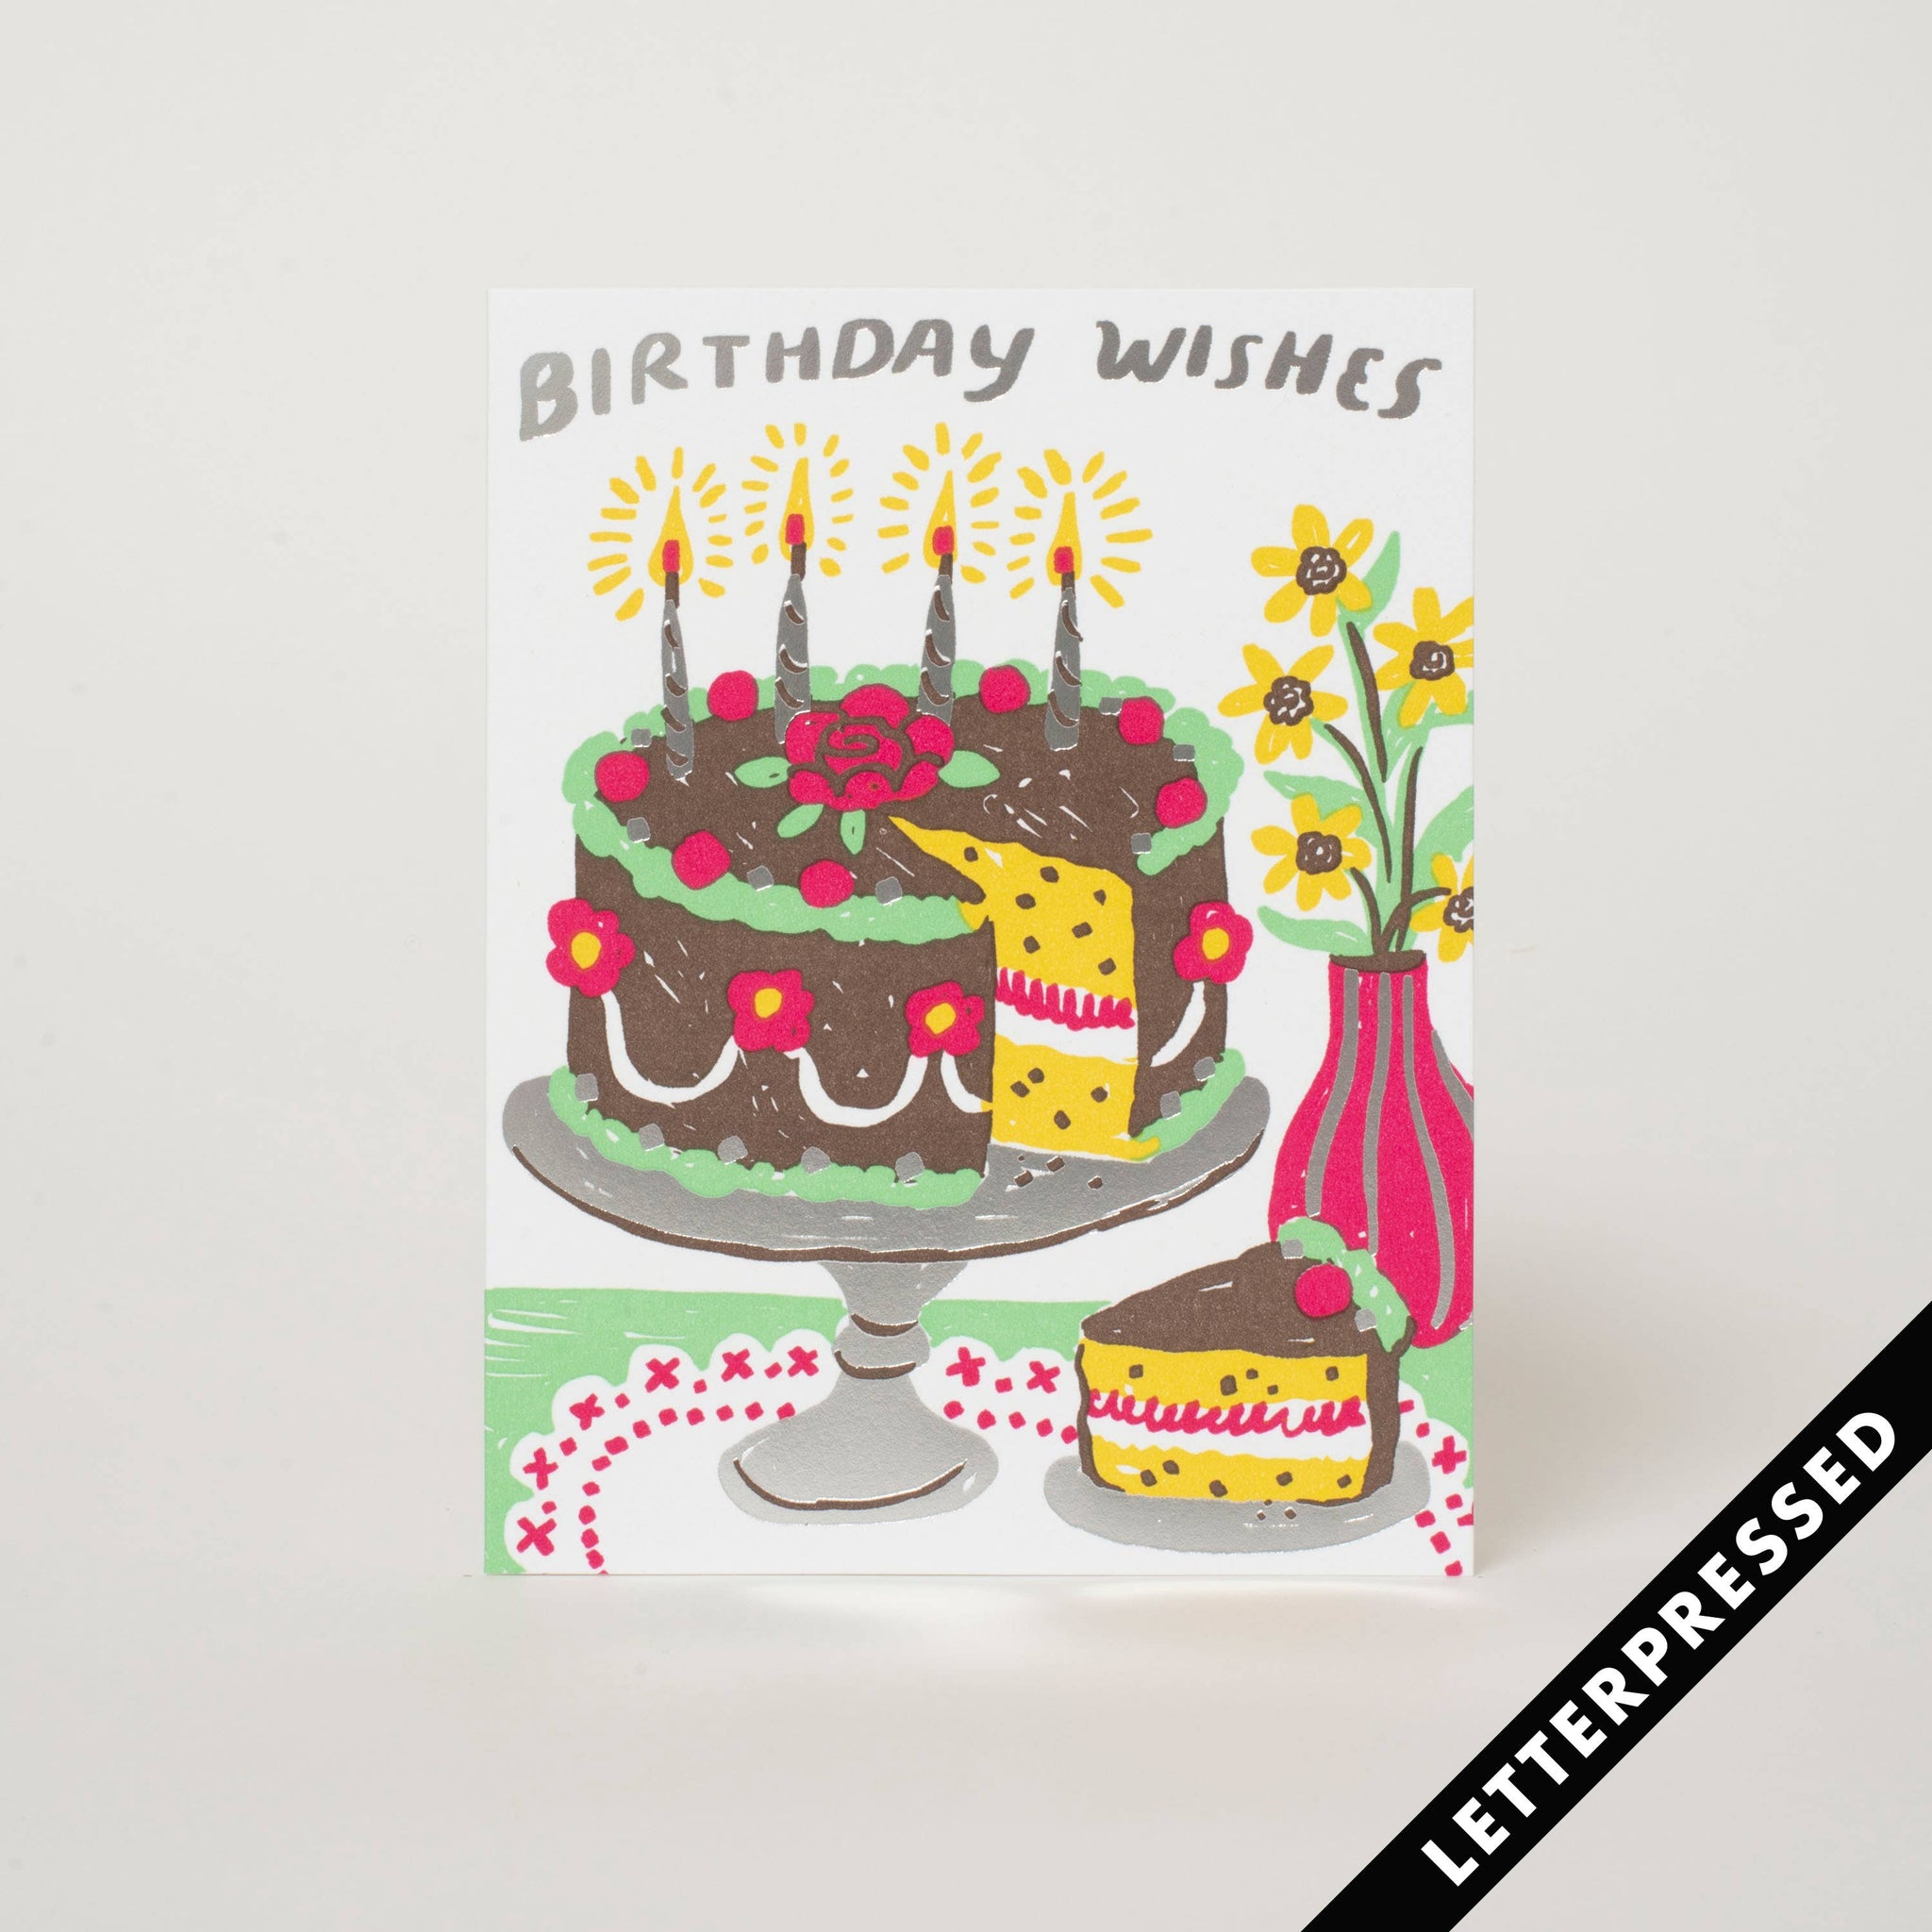 PHOEBE WAHL -- Birthday Cake Wishes